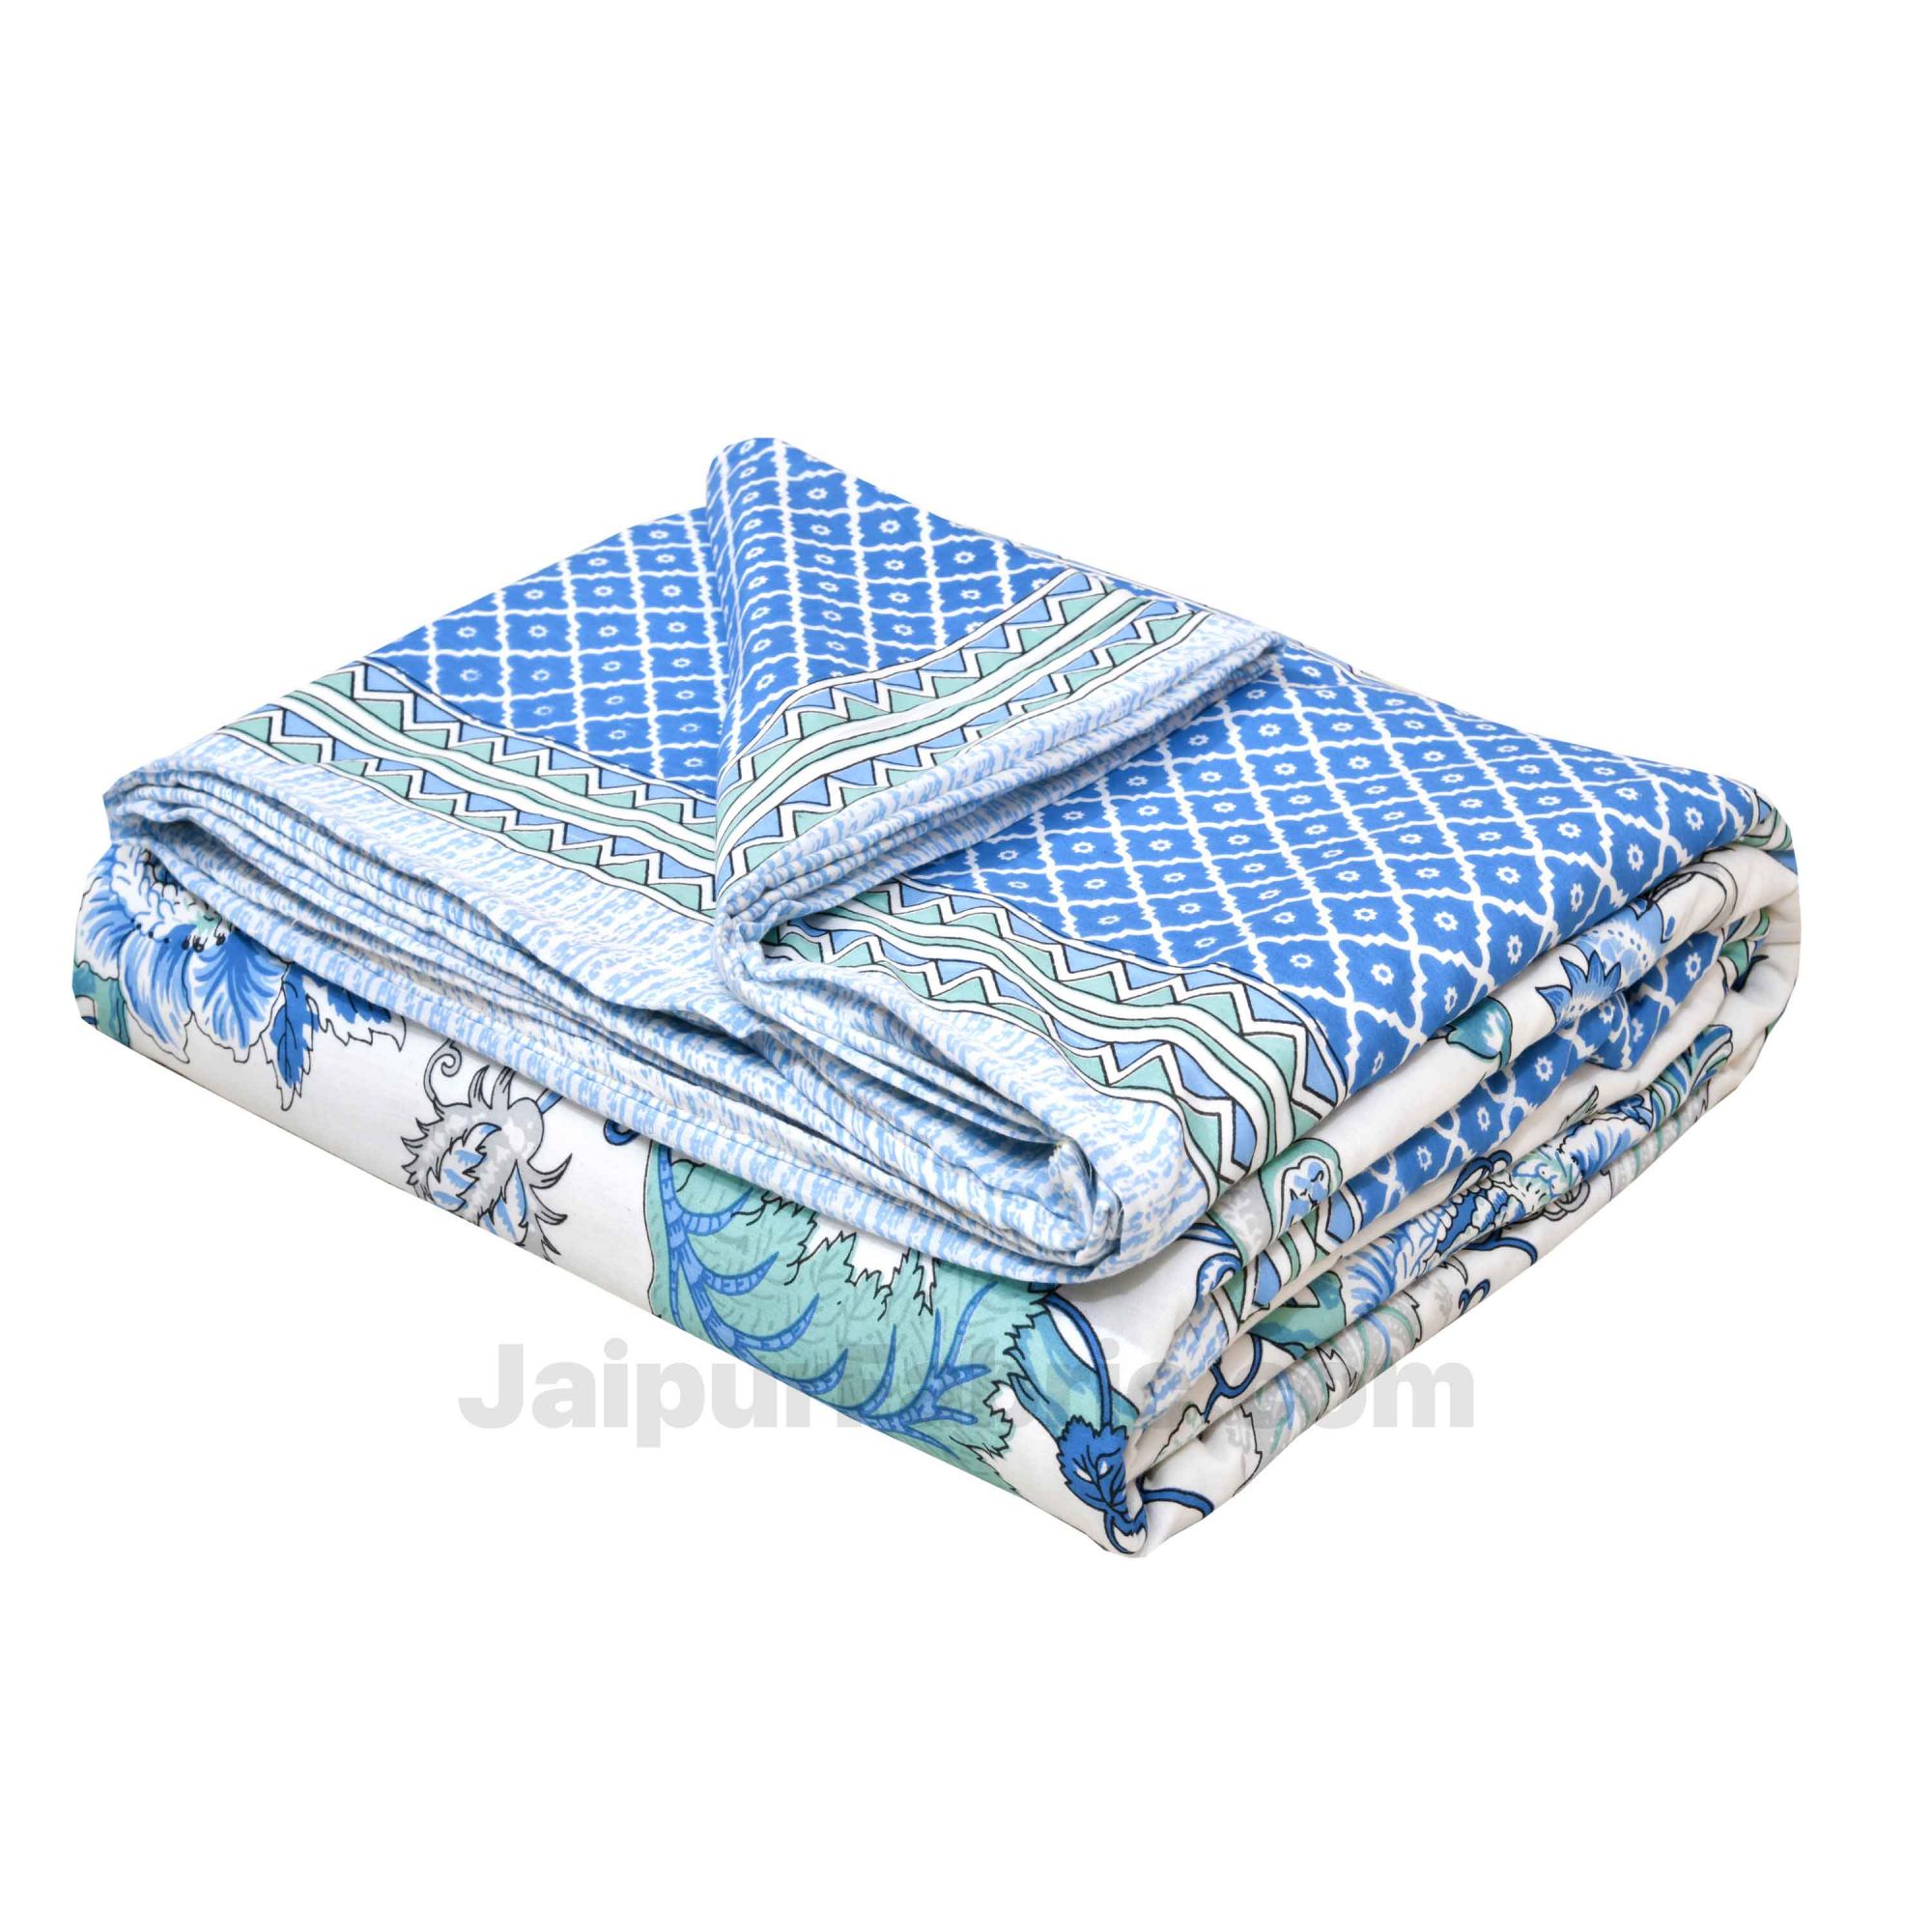 Lightweight Reversible Double Bed Dohar Blue Gala Flowers Skin Friendly Pure Cotton MulMul Blanket / AC Comforter / Summer Quilt